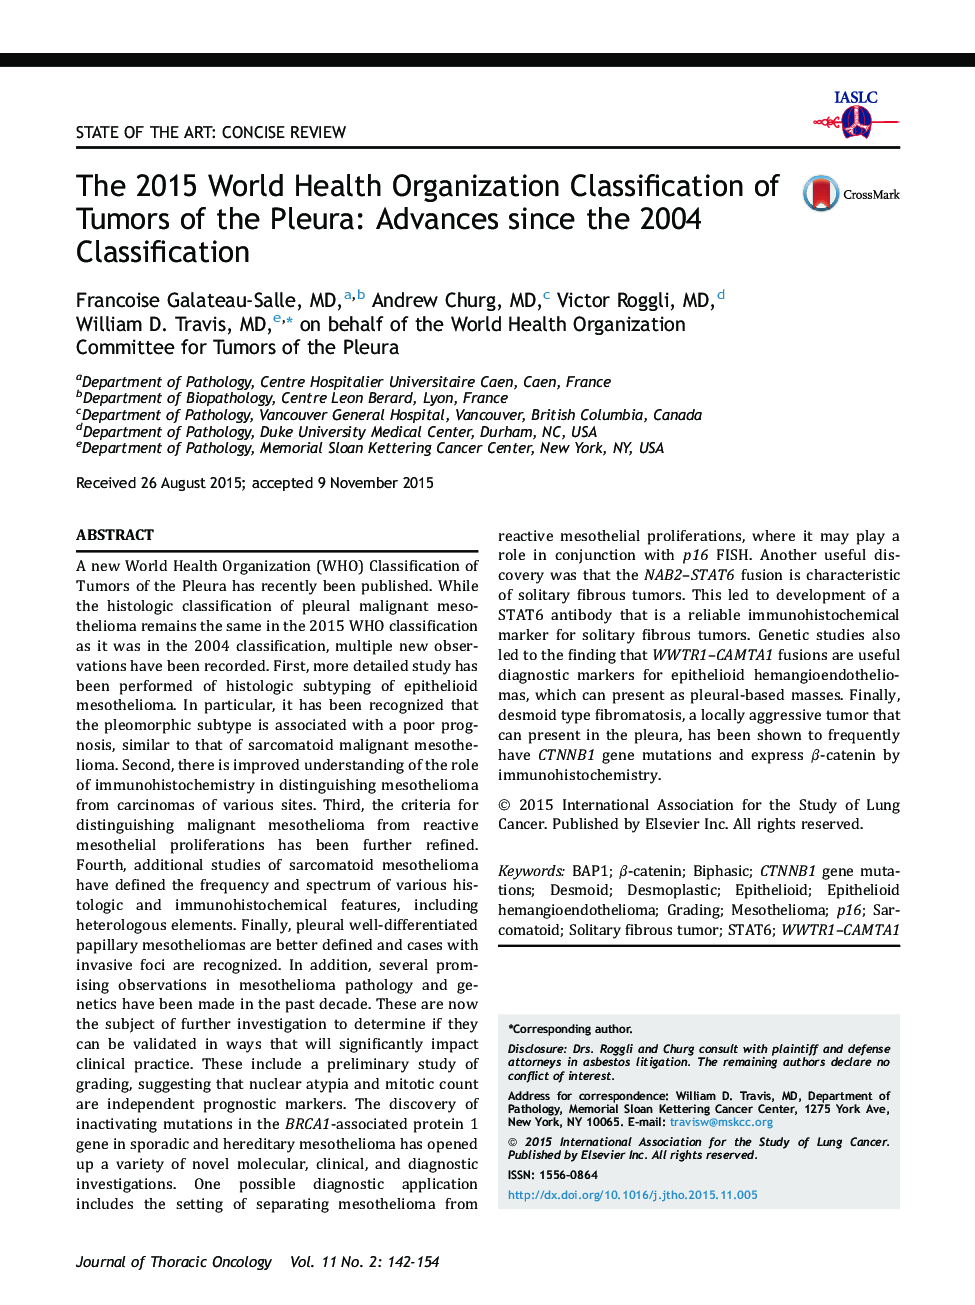 The 2015 World Health Organization Classification of Tumors of the Pleura: Advances since the 2004 Classification 